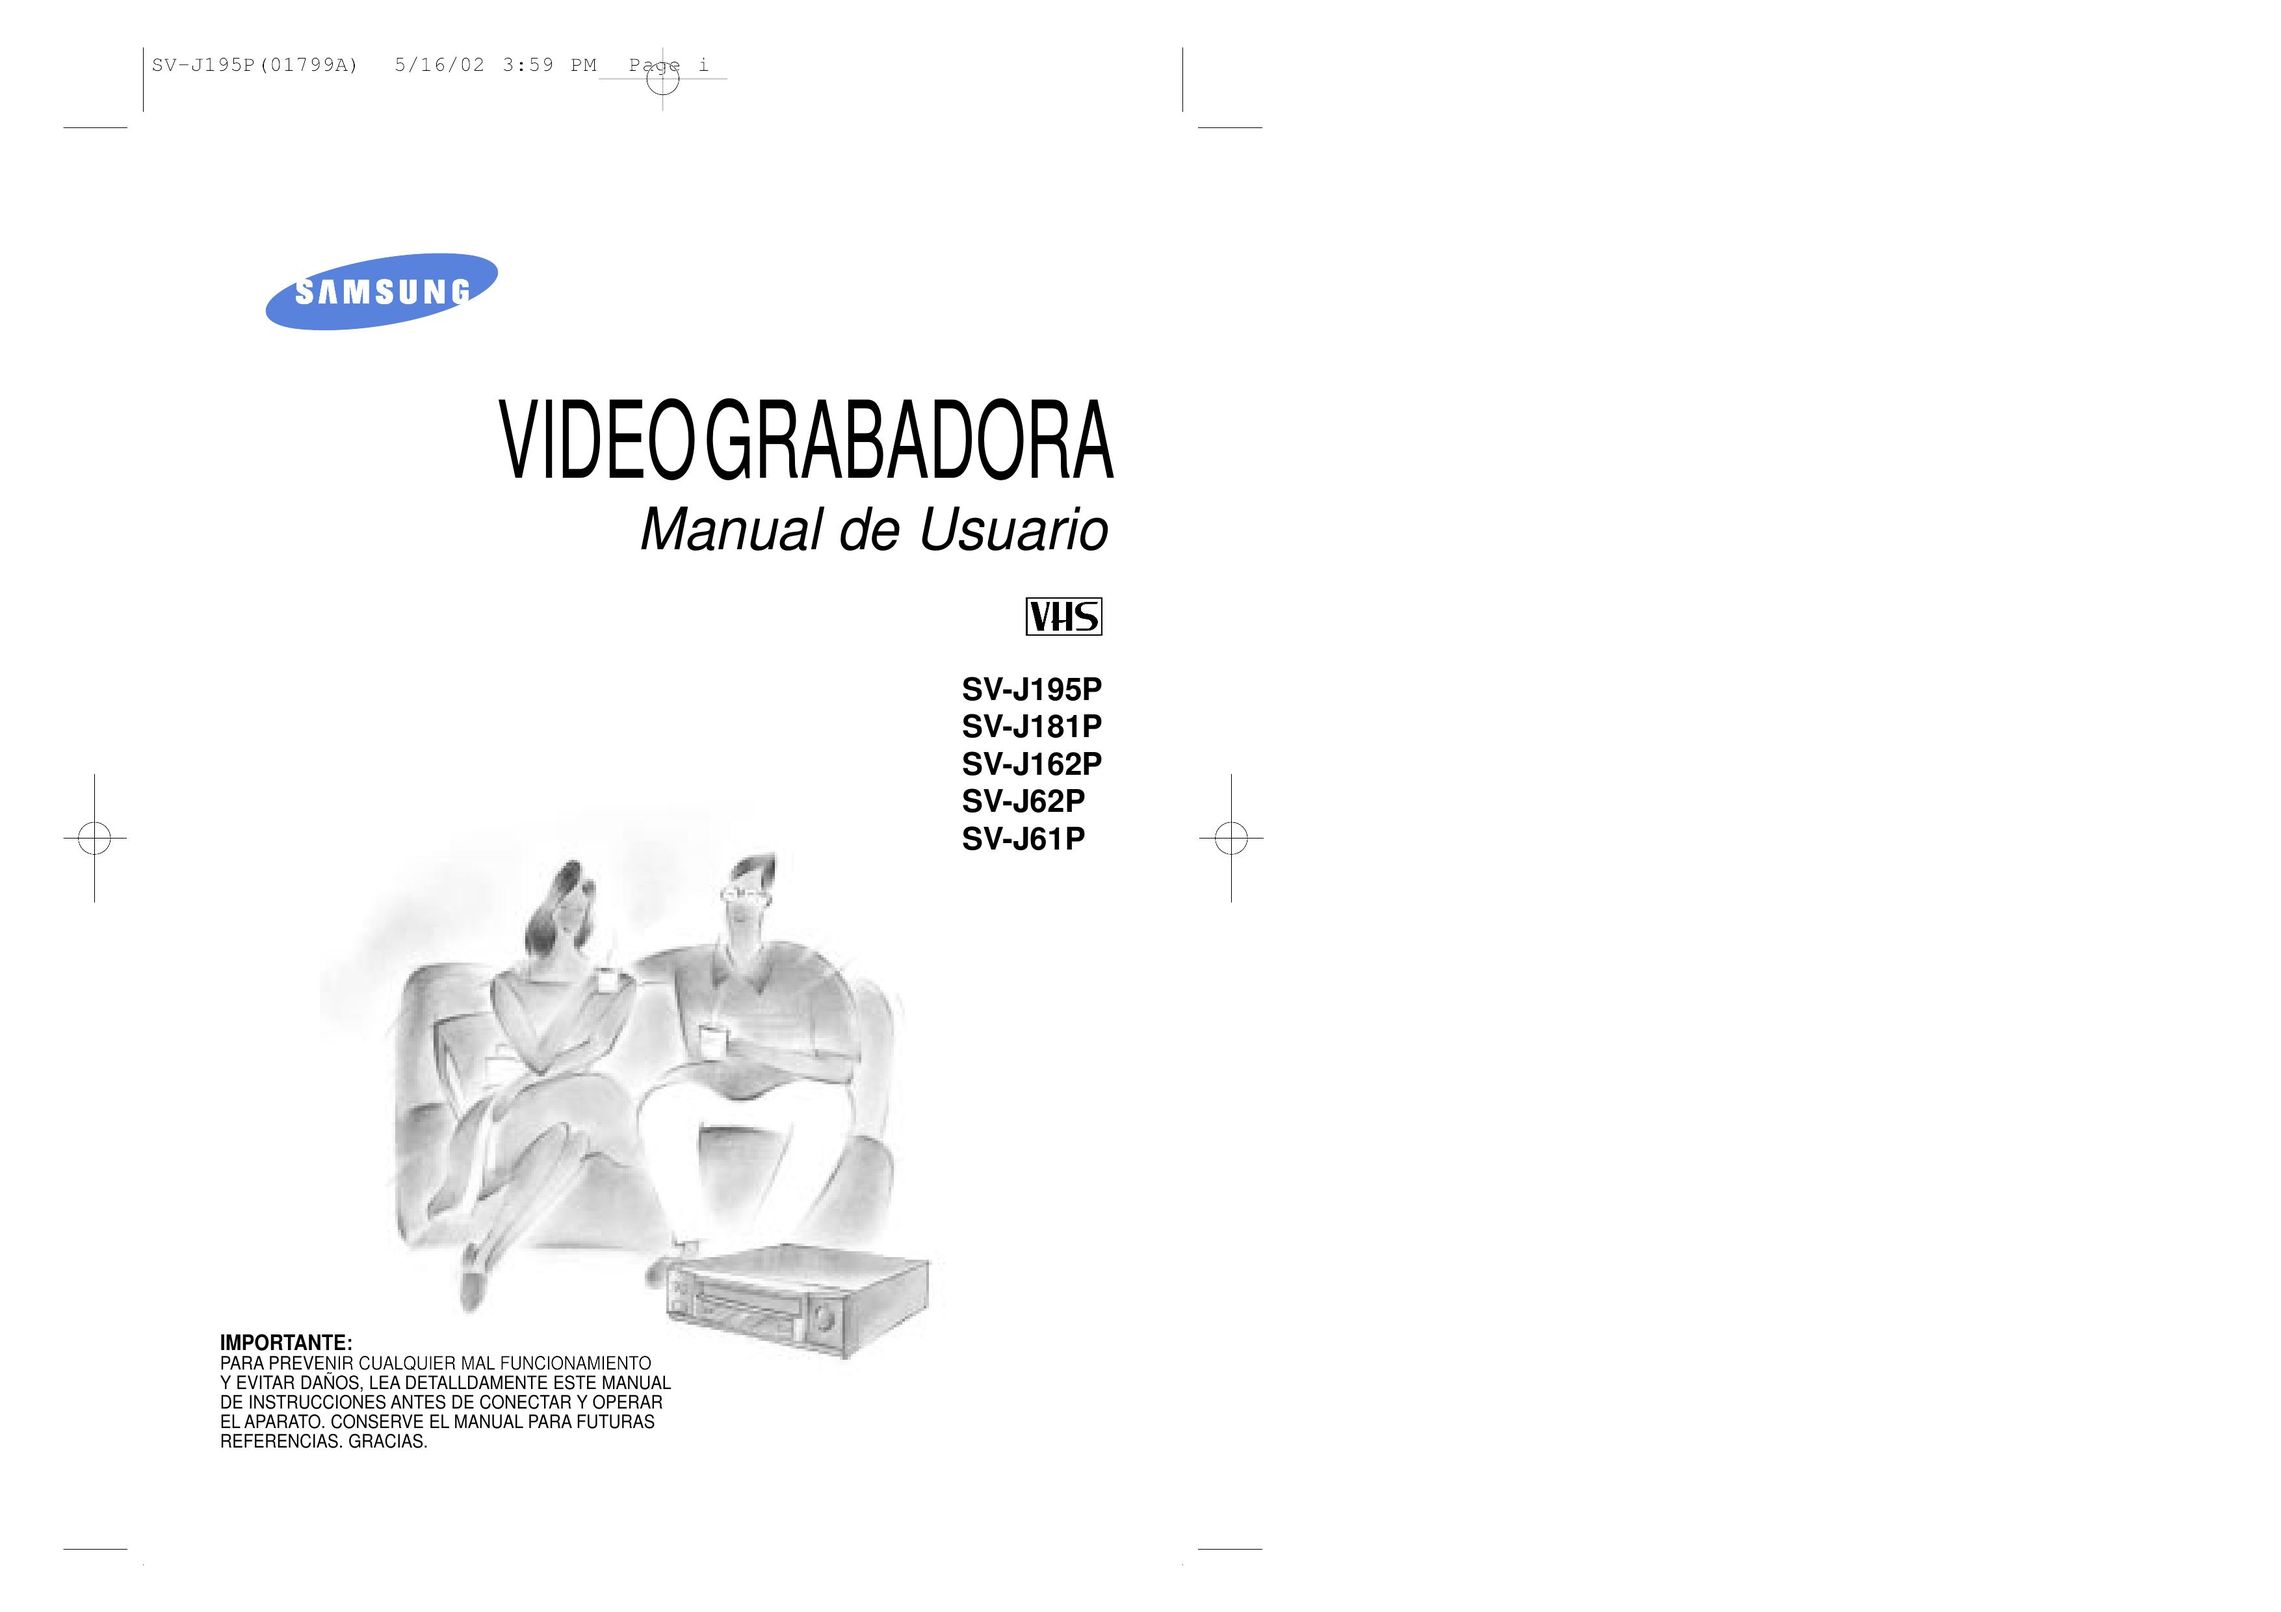 Samsung SV-J162P VCR User Manual